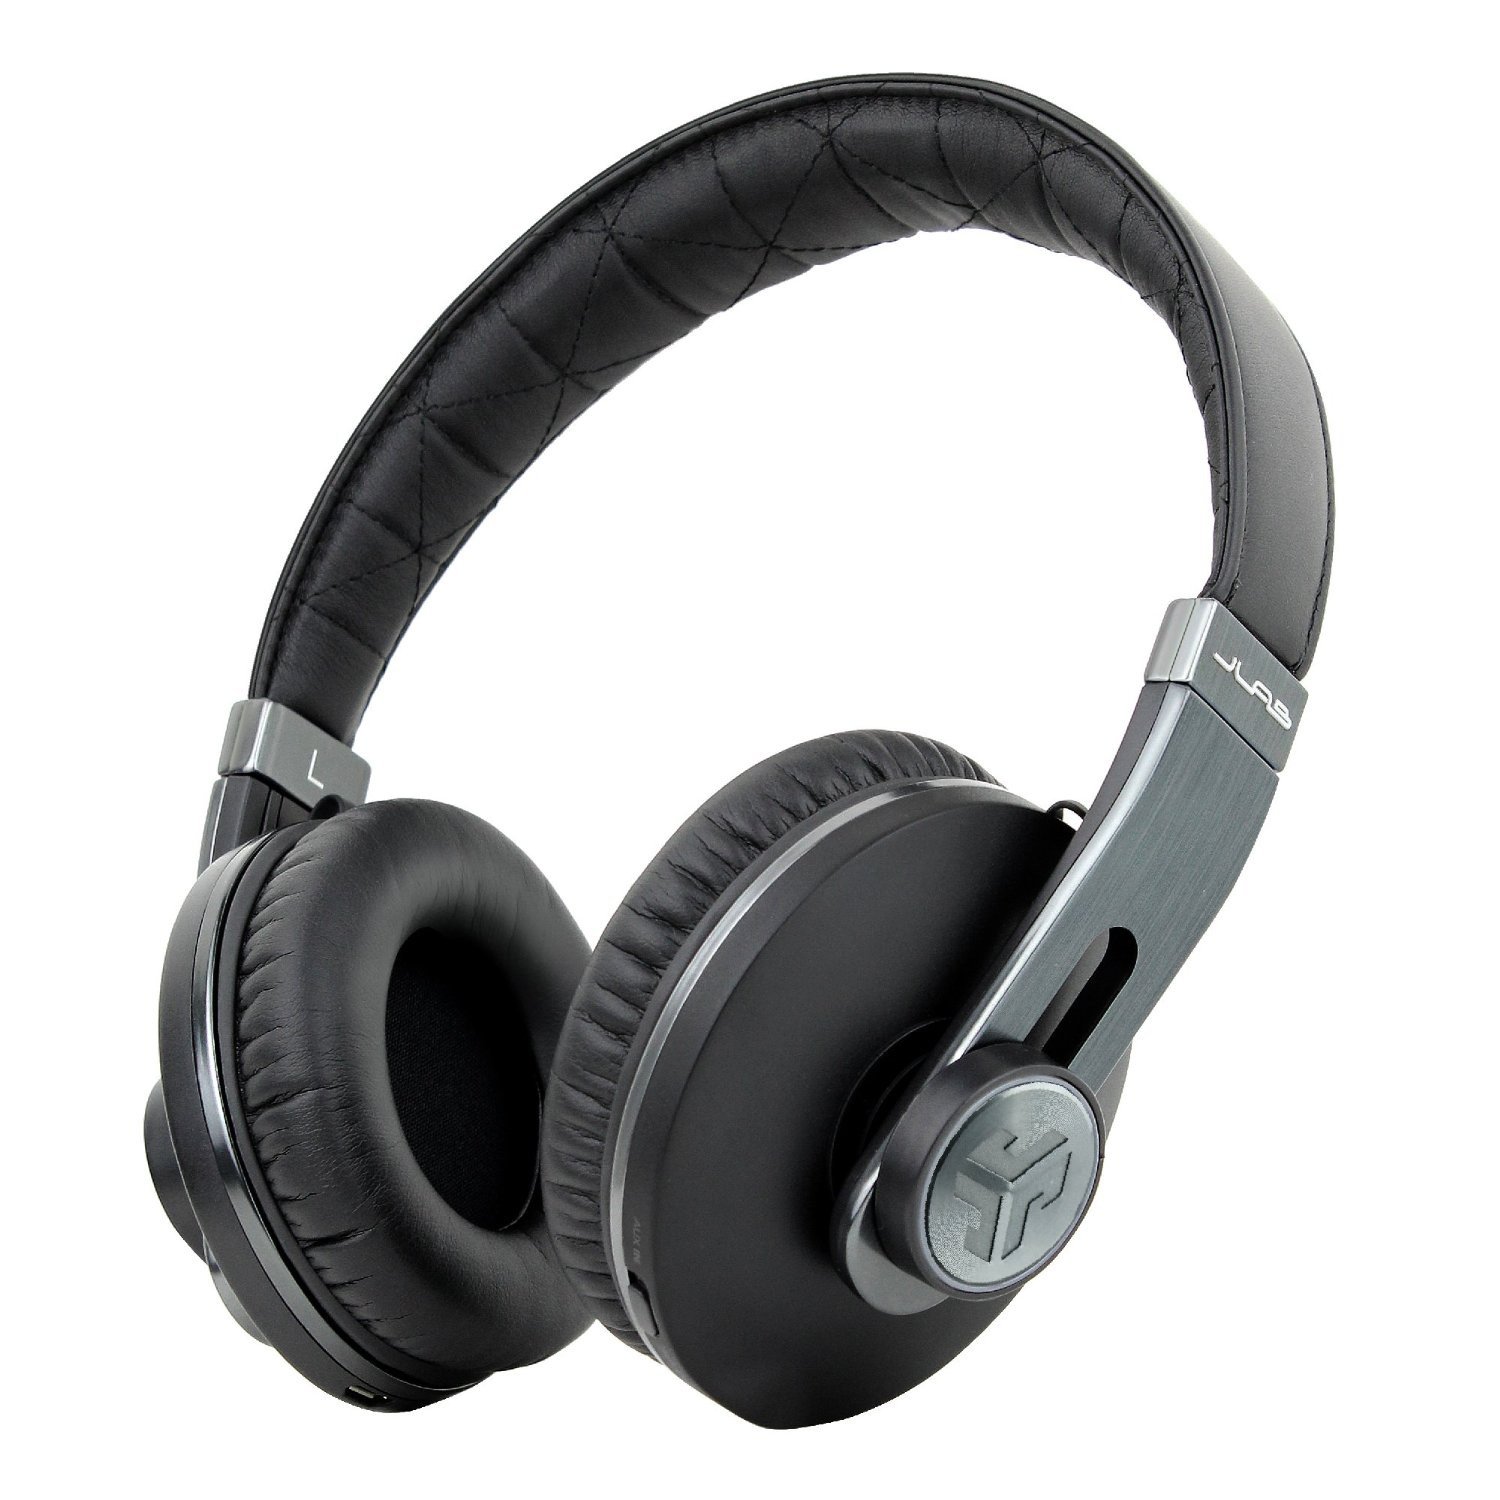 JLab Audio OMNI Premium Over-Ear Bluetooth Headphones with Mic - Black - image 1 of 7